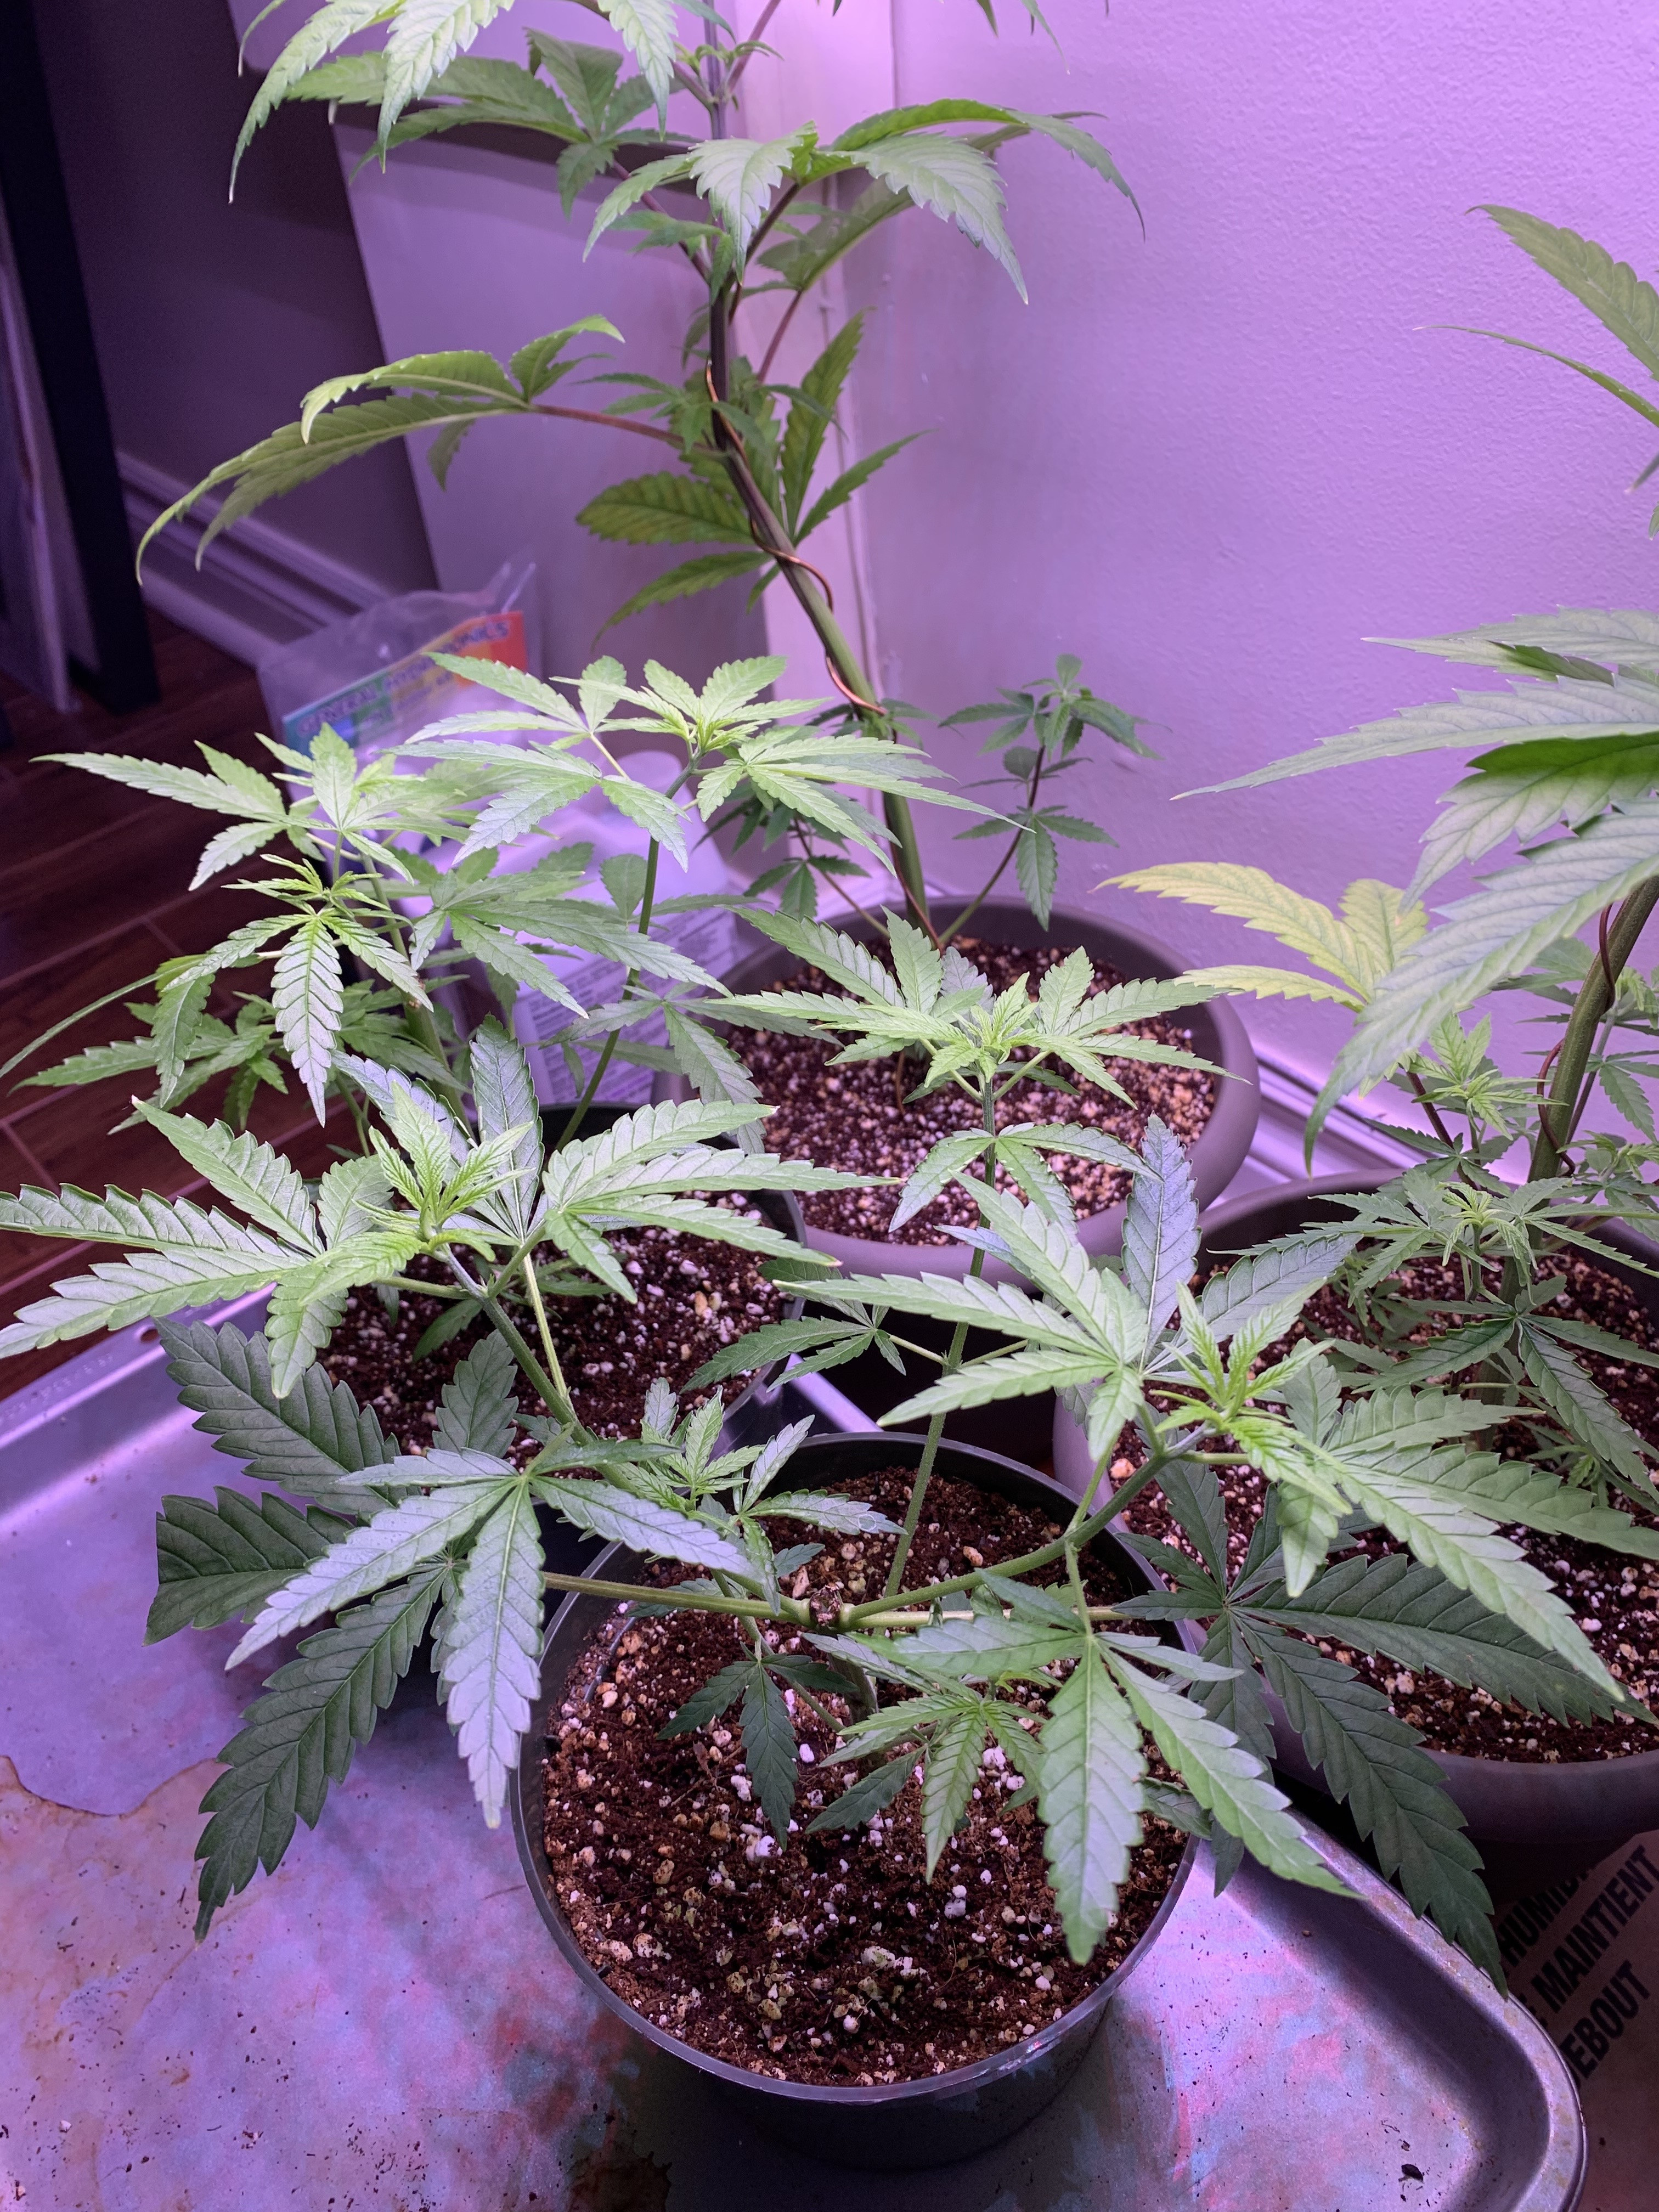 Cannabis as houseplant - GrowWeedEasy.com Cannabis Growing Forum